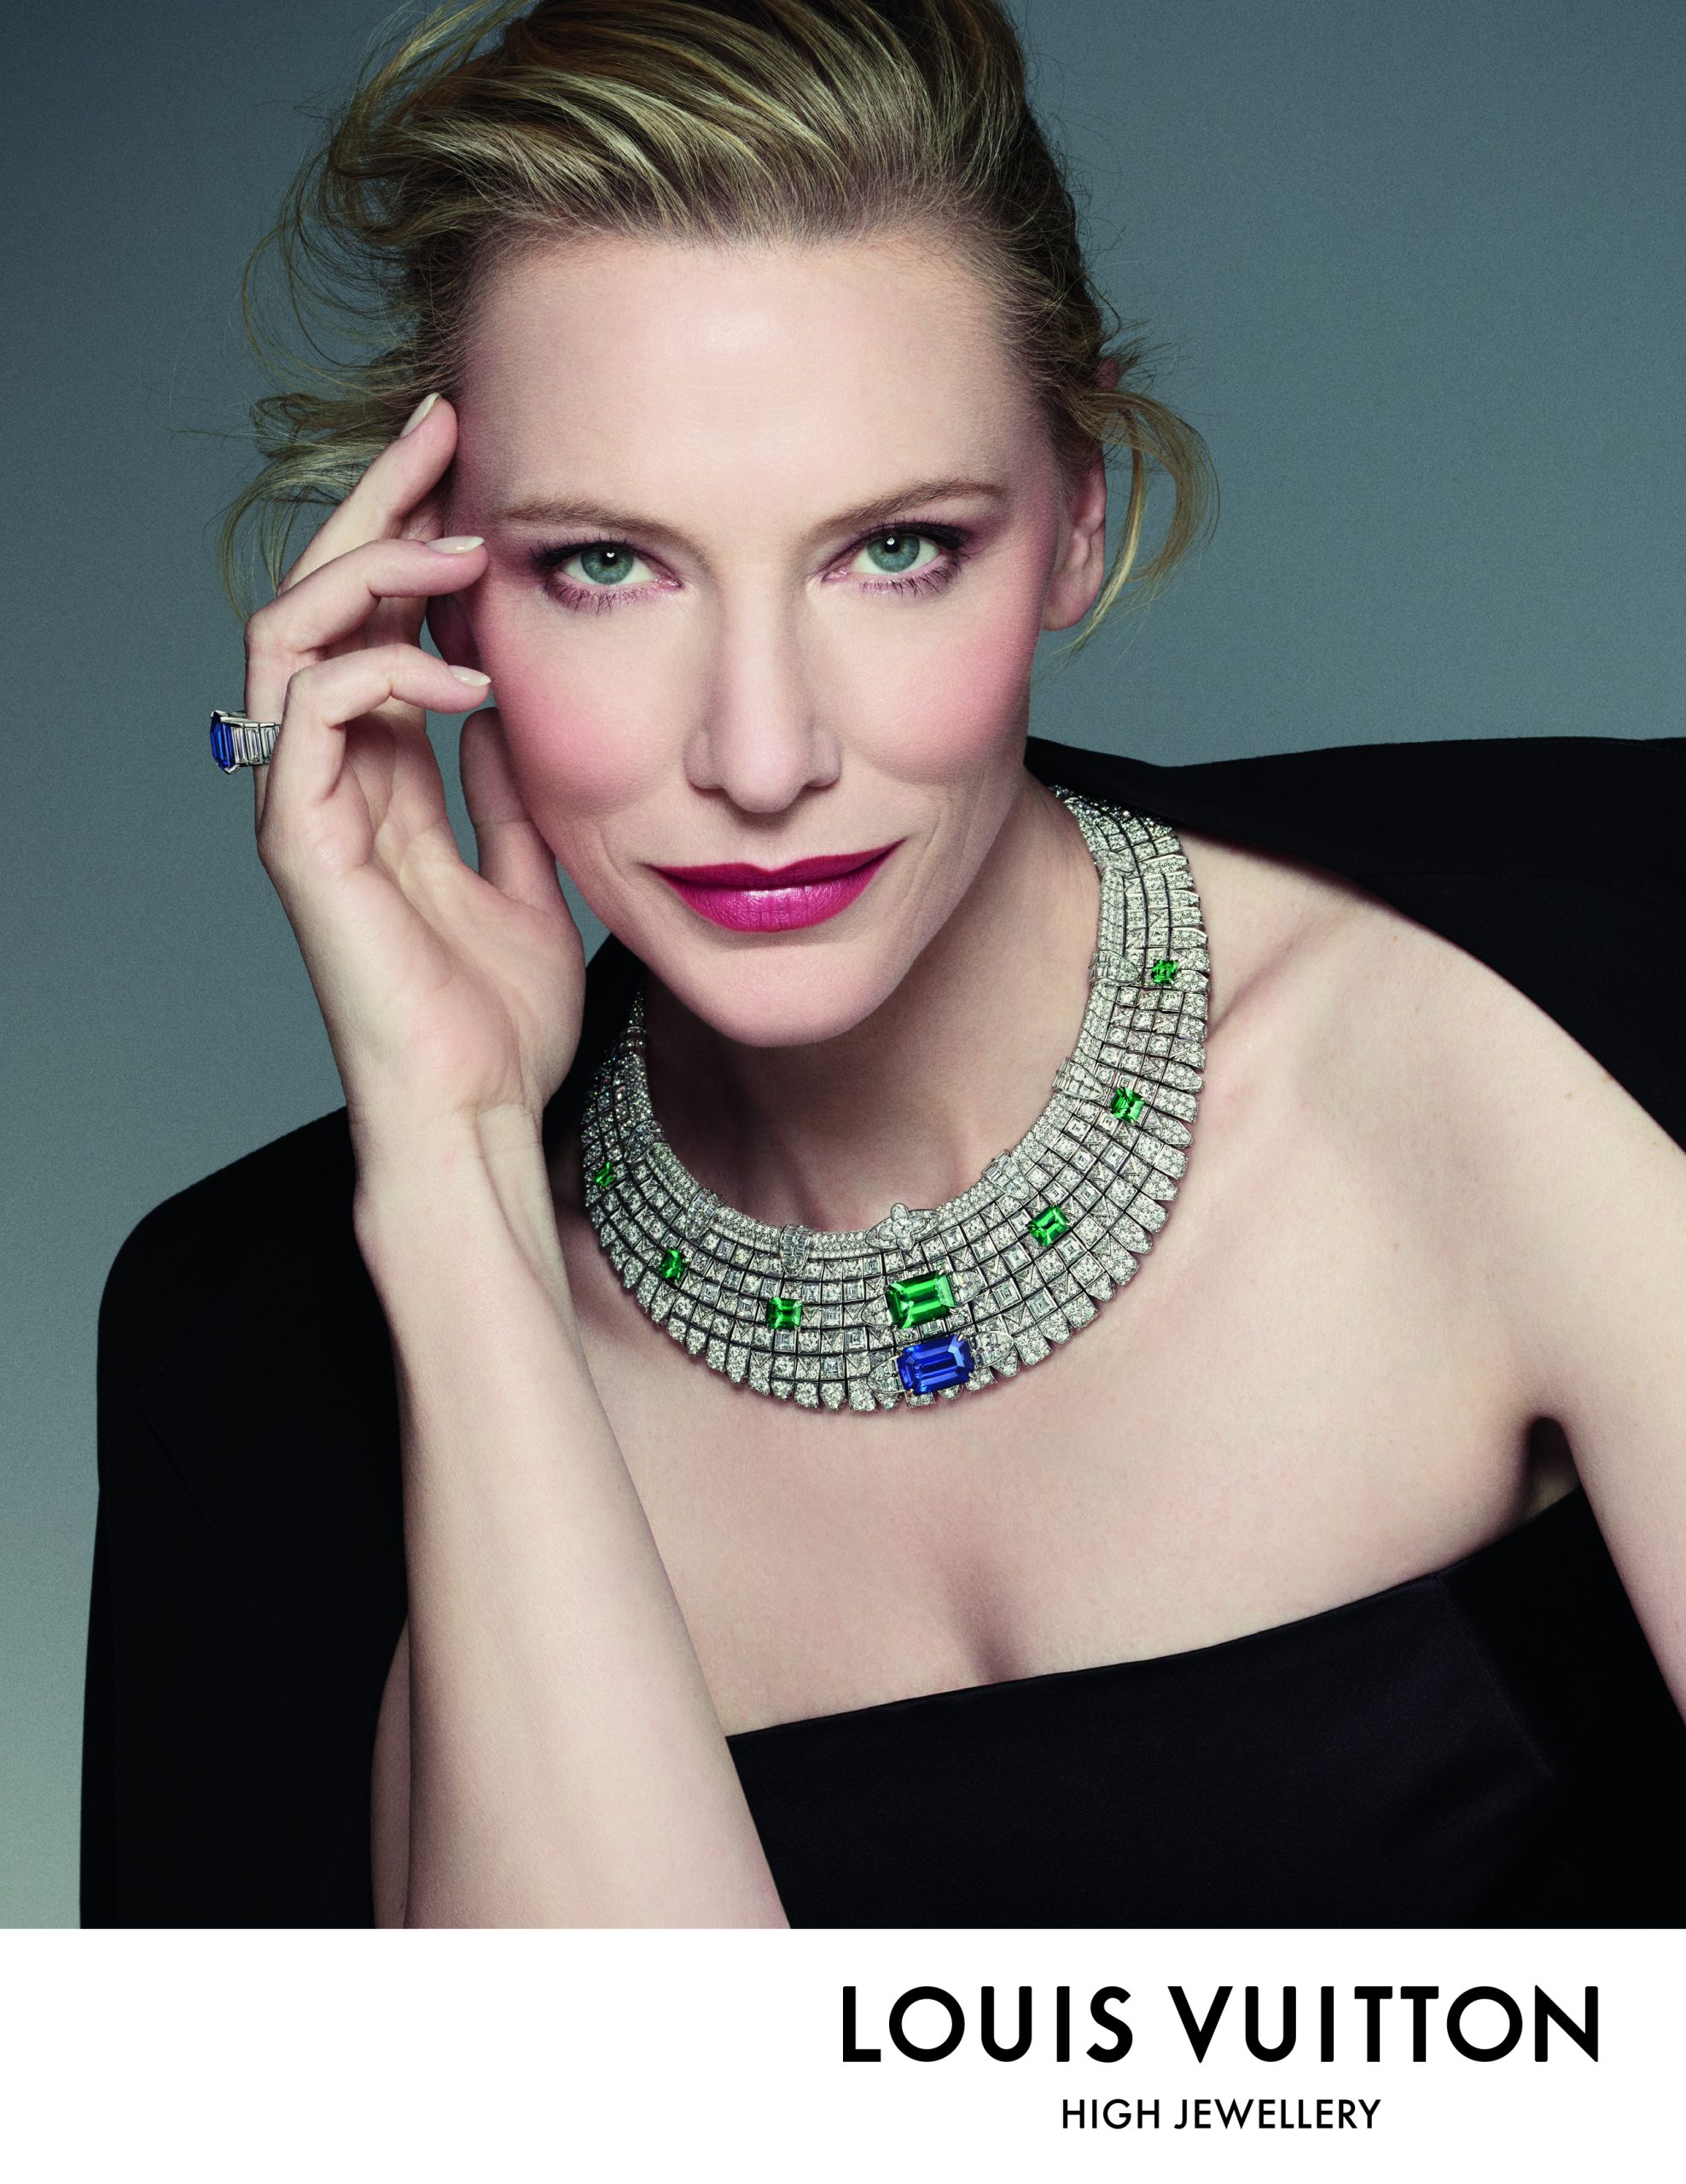 Louis Vuitton Announce Cate Blanchett As Their Newest House Ambassador